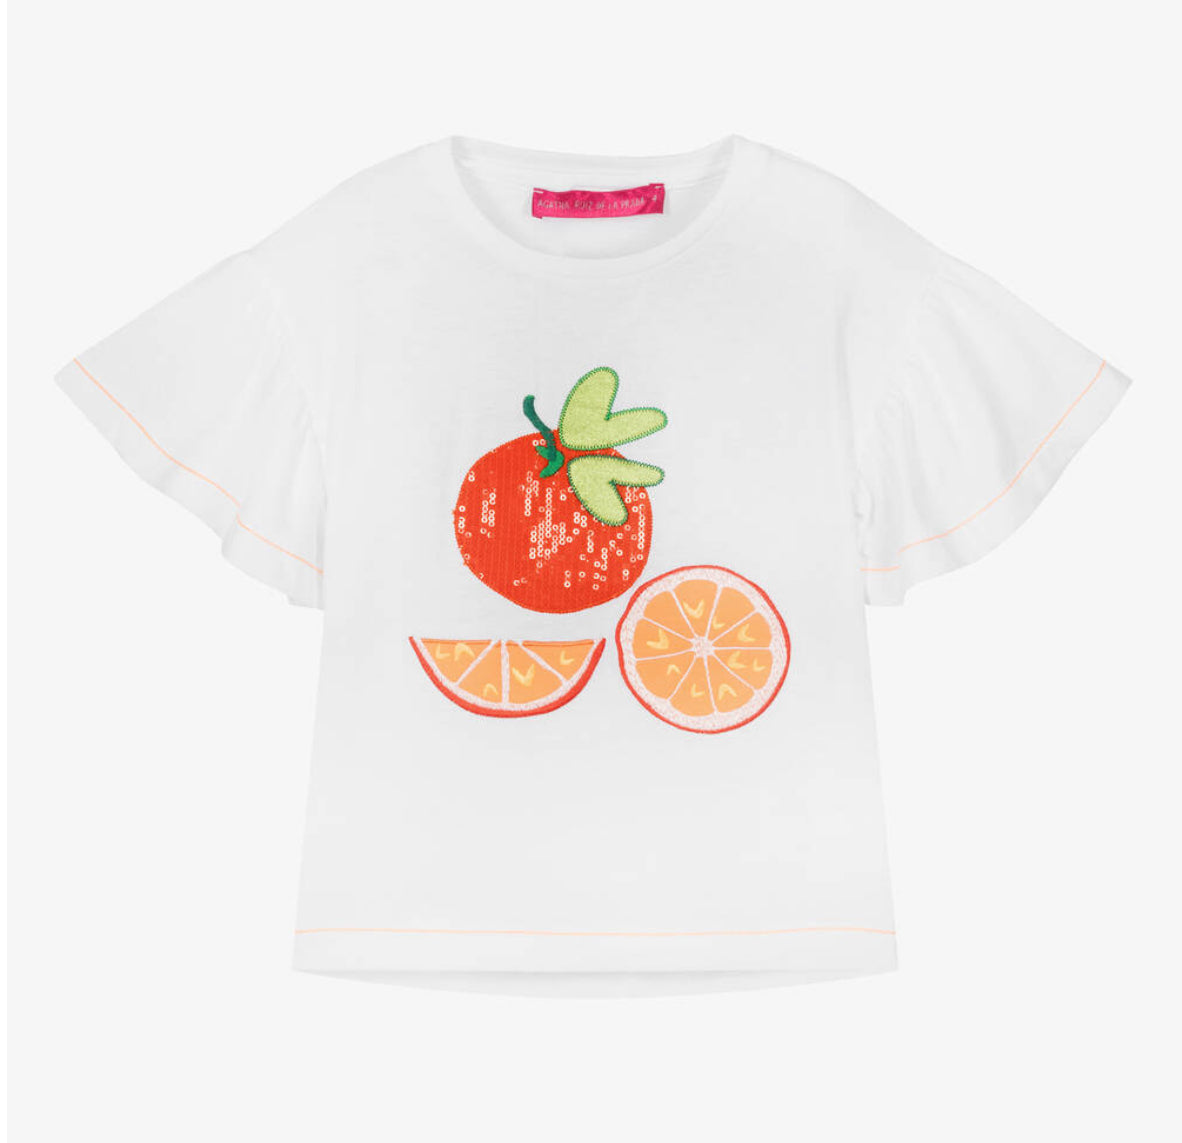 Agatha Ruiz de la Prada Girls Las Palmas Fruit Printed Shorts and White T shirt with Matching Fruit image